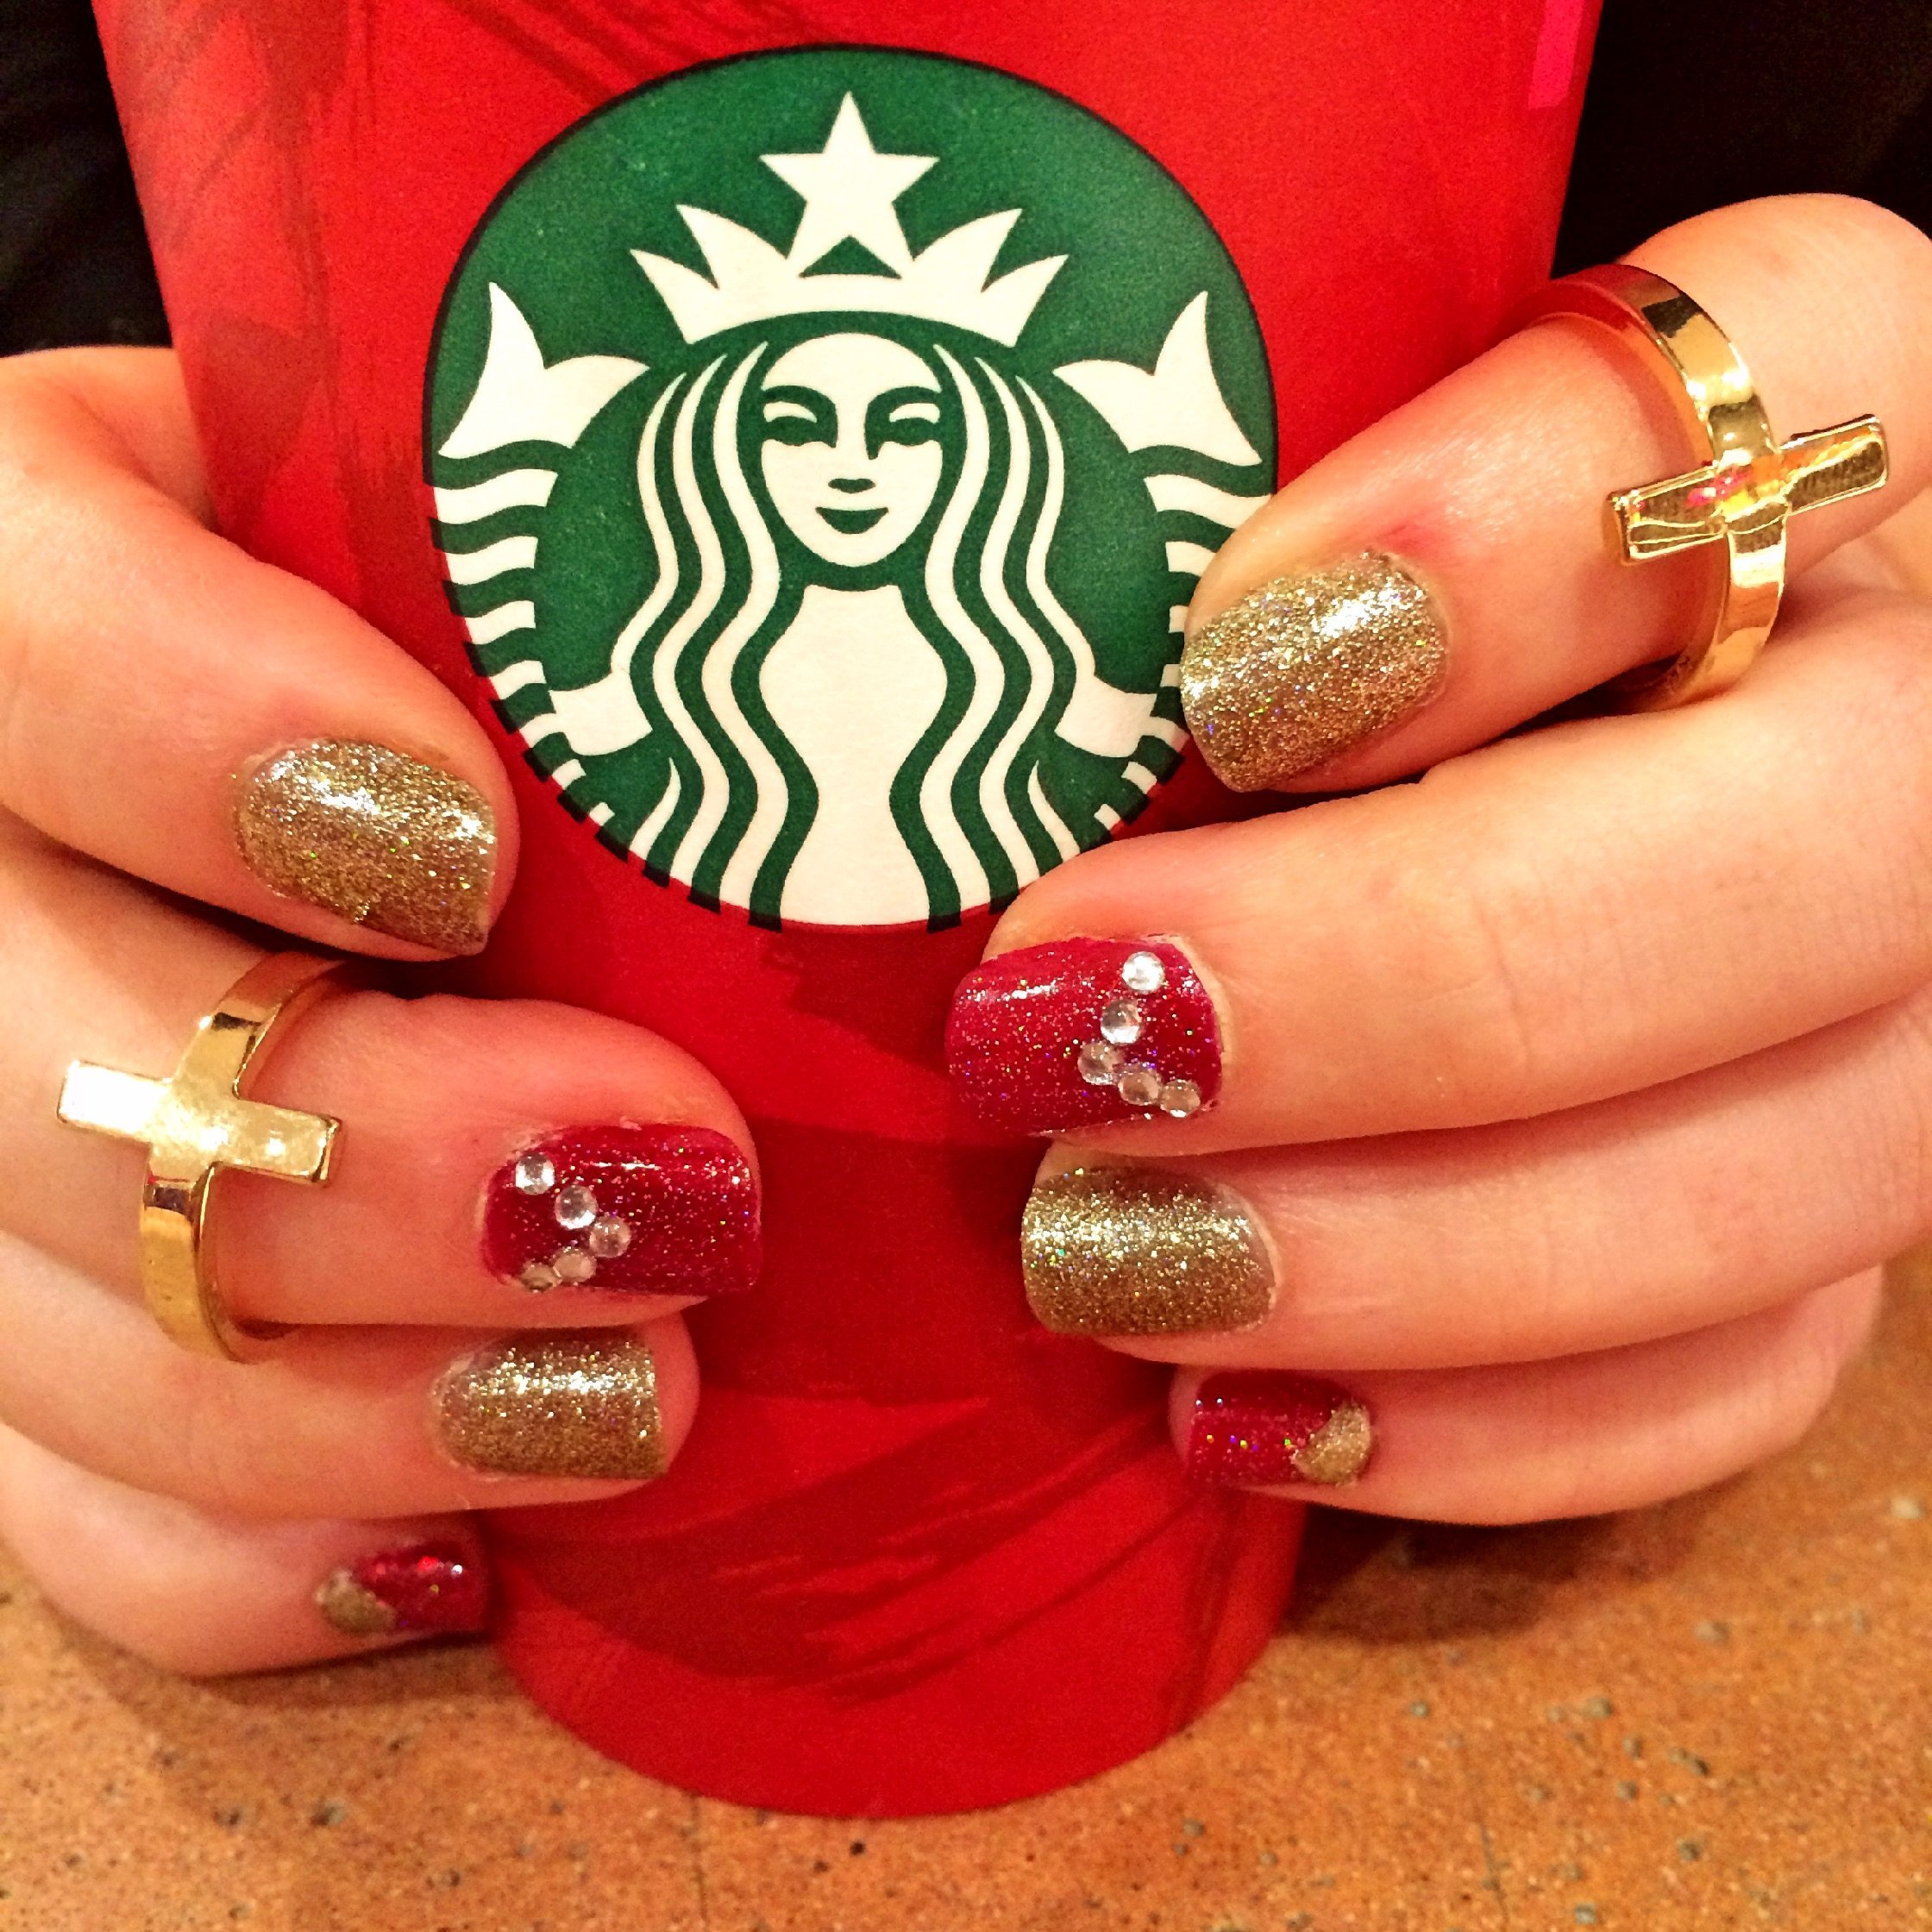 How'd I do on my Holiday Starbucks Nails?!